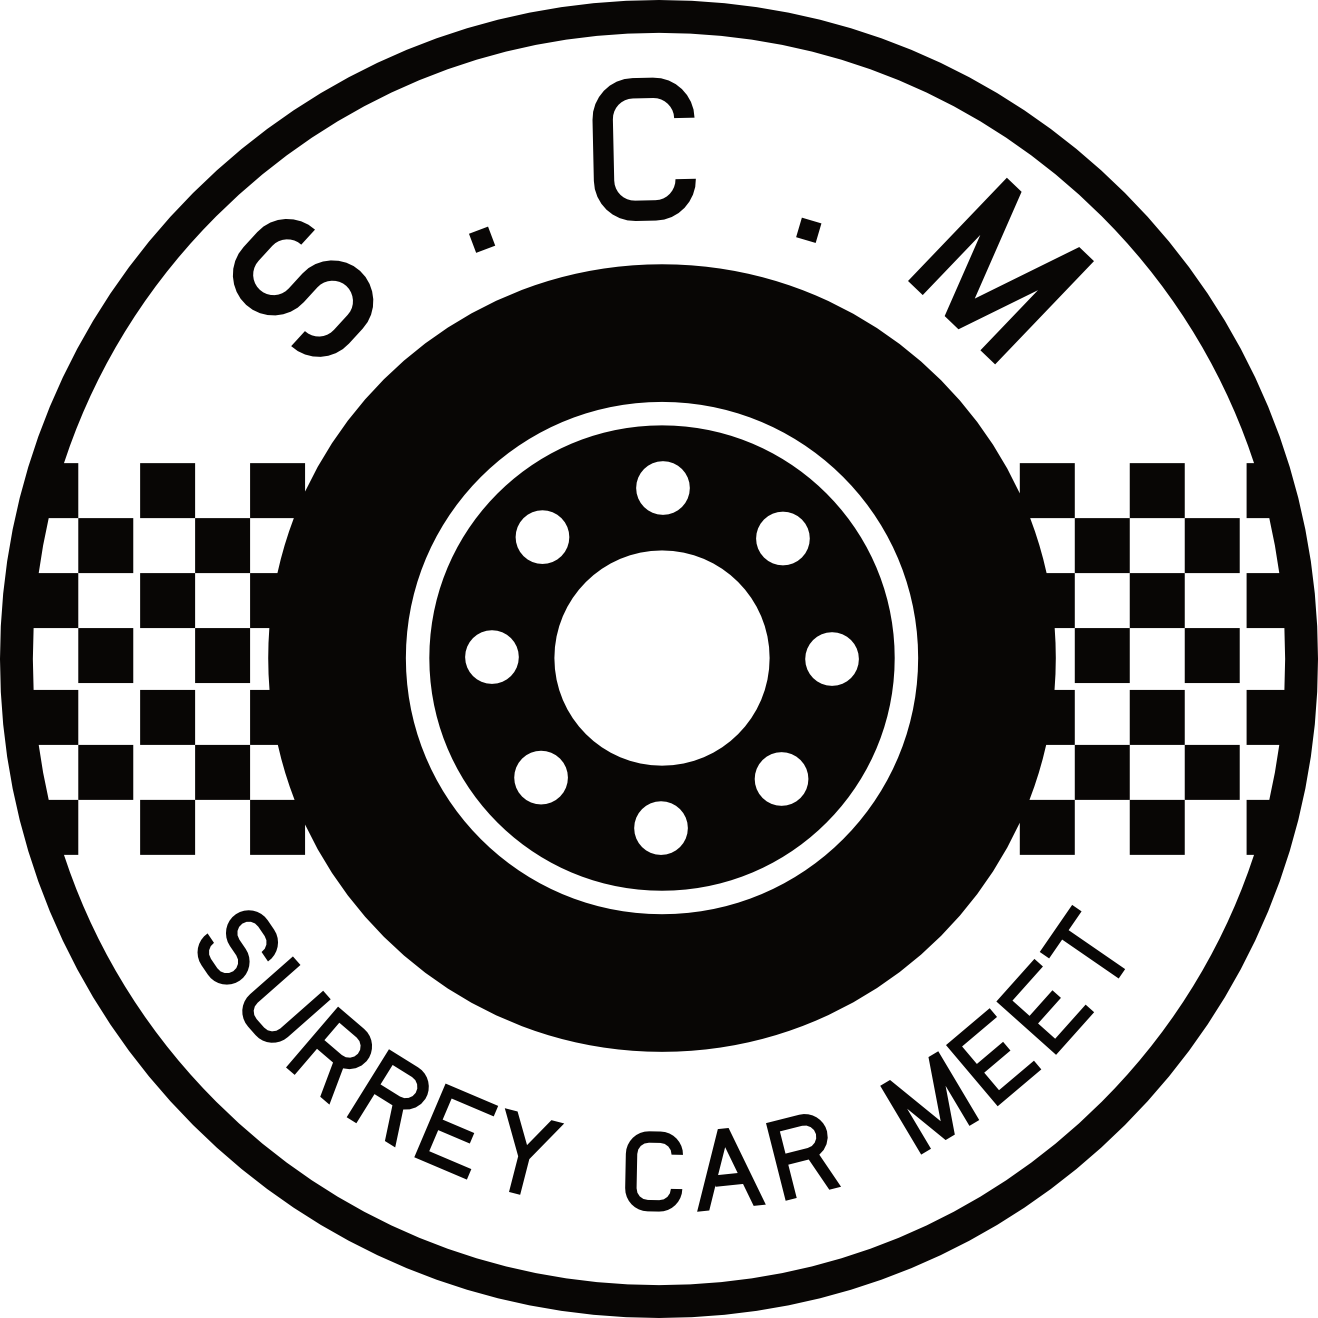 Surrey Car Meet